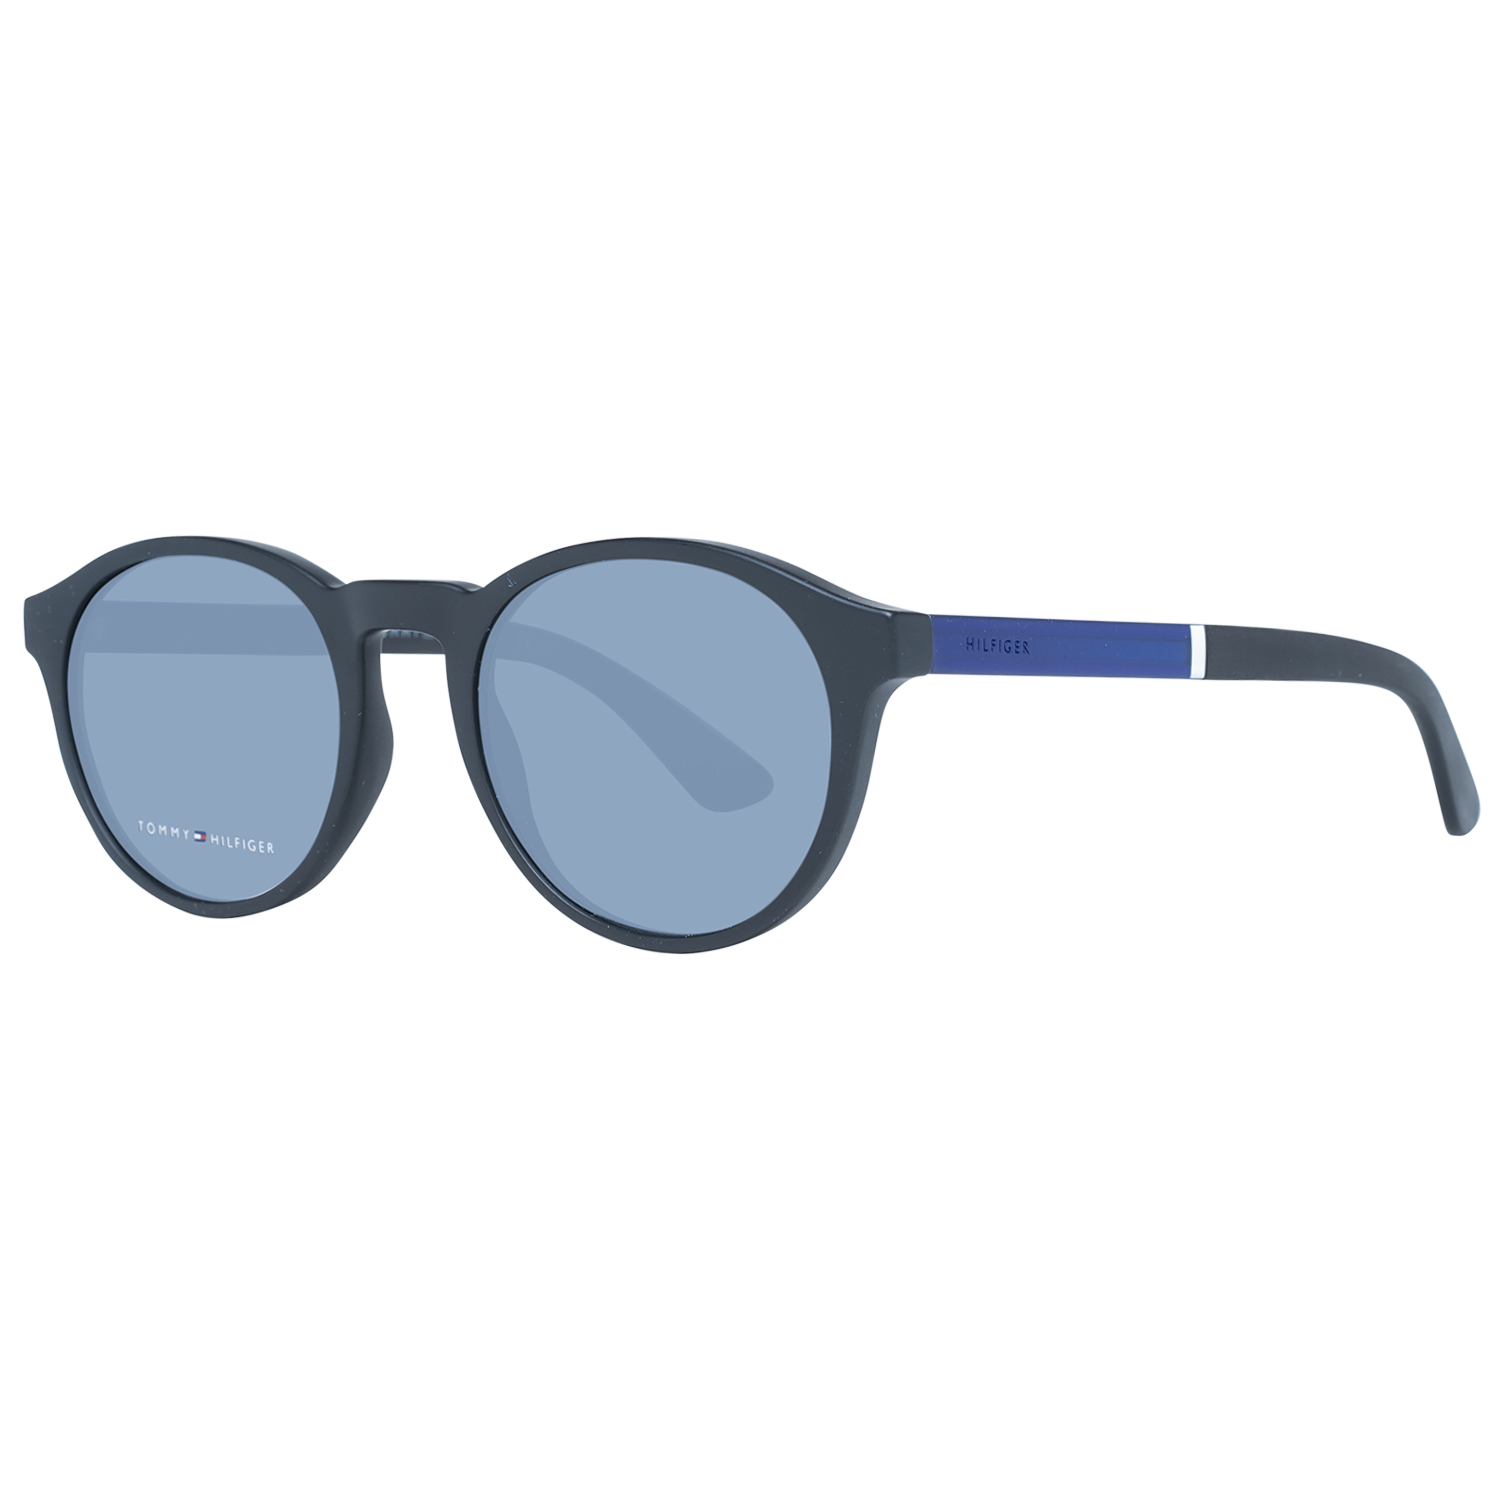 Tommy Hilfiger Sunglasses Tommy Hilfiger Sunglasses TH 1476/S 51 D51IR Eyeglasses Eyewear UK USA Australia 